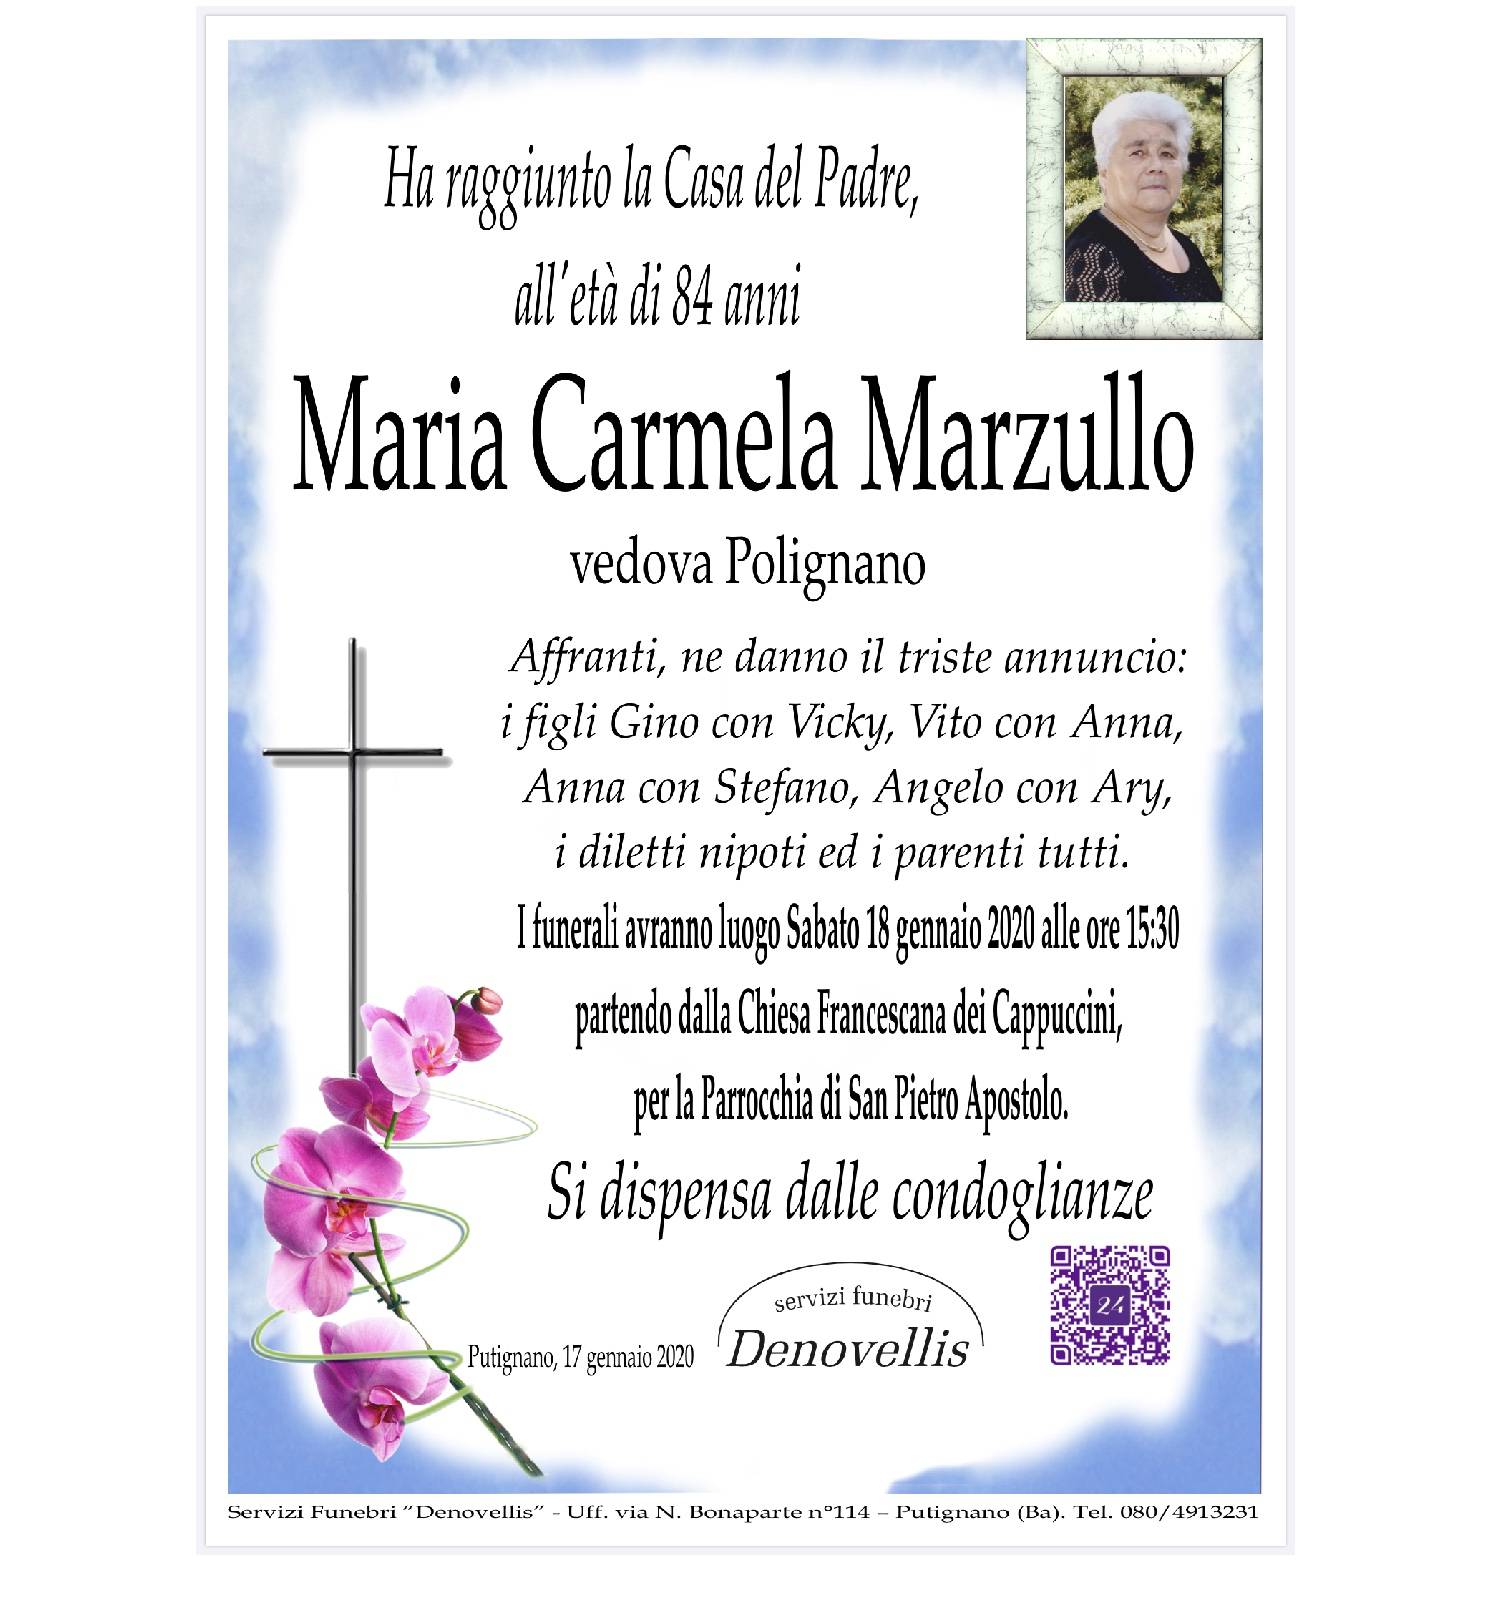 Maria Carmela Marzullo